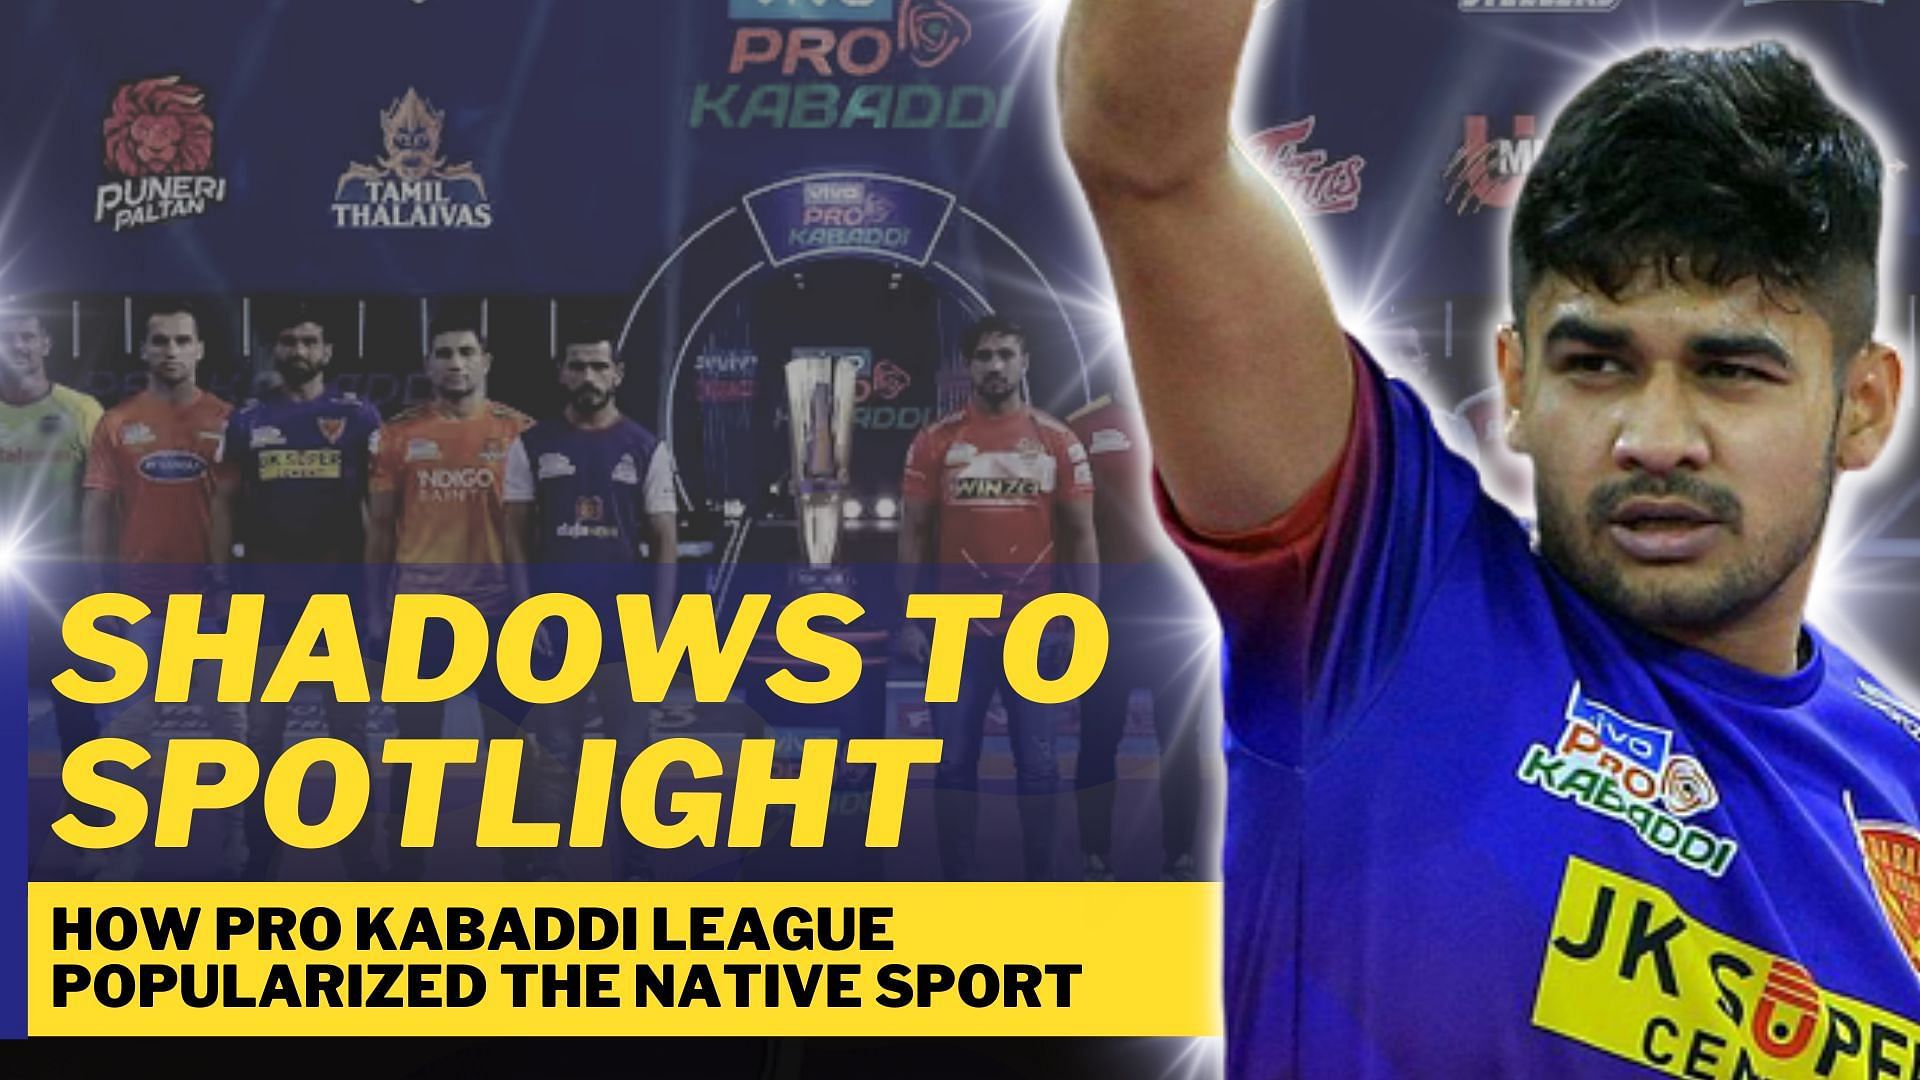 From Shadows to Spotlight: How Pro Kabaddi League Popularized the Native Sport